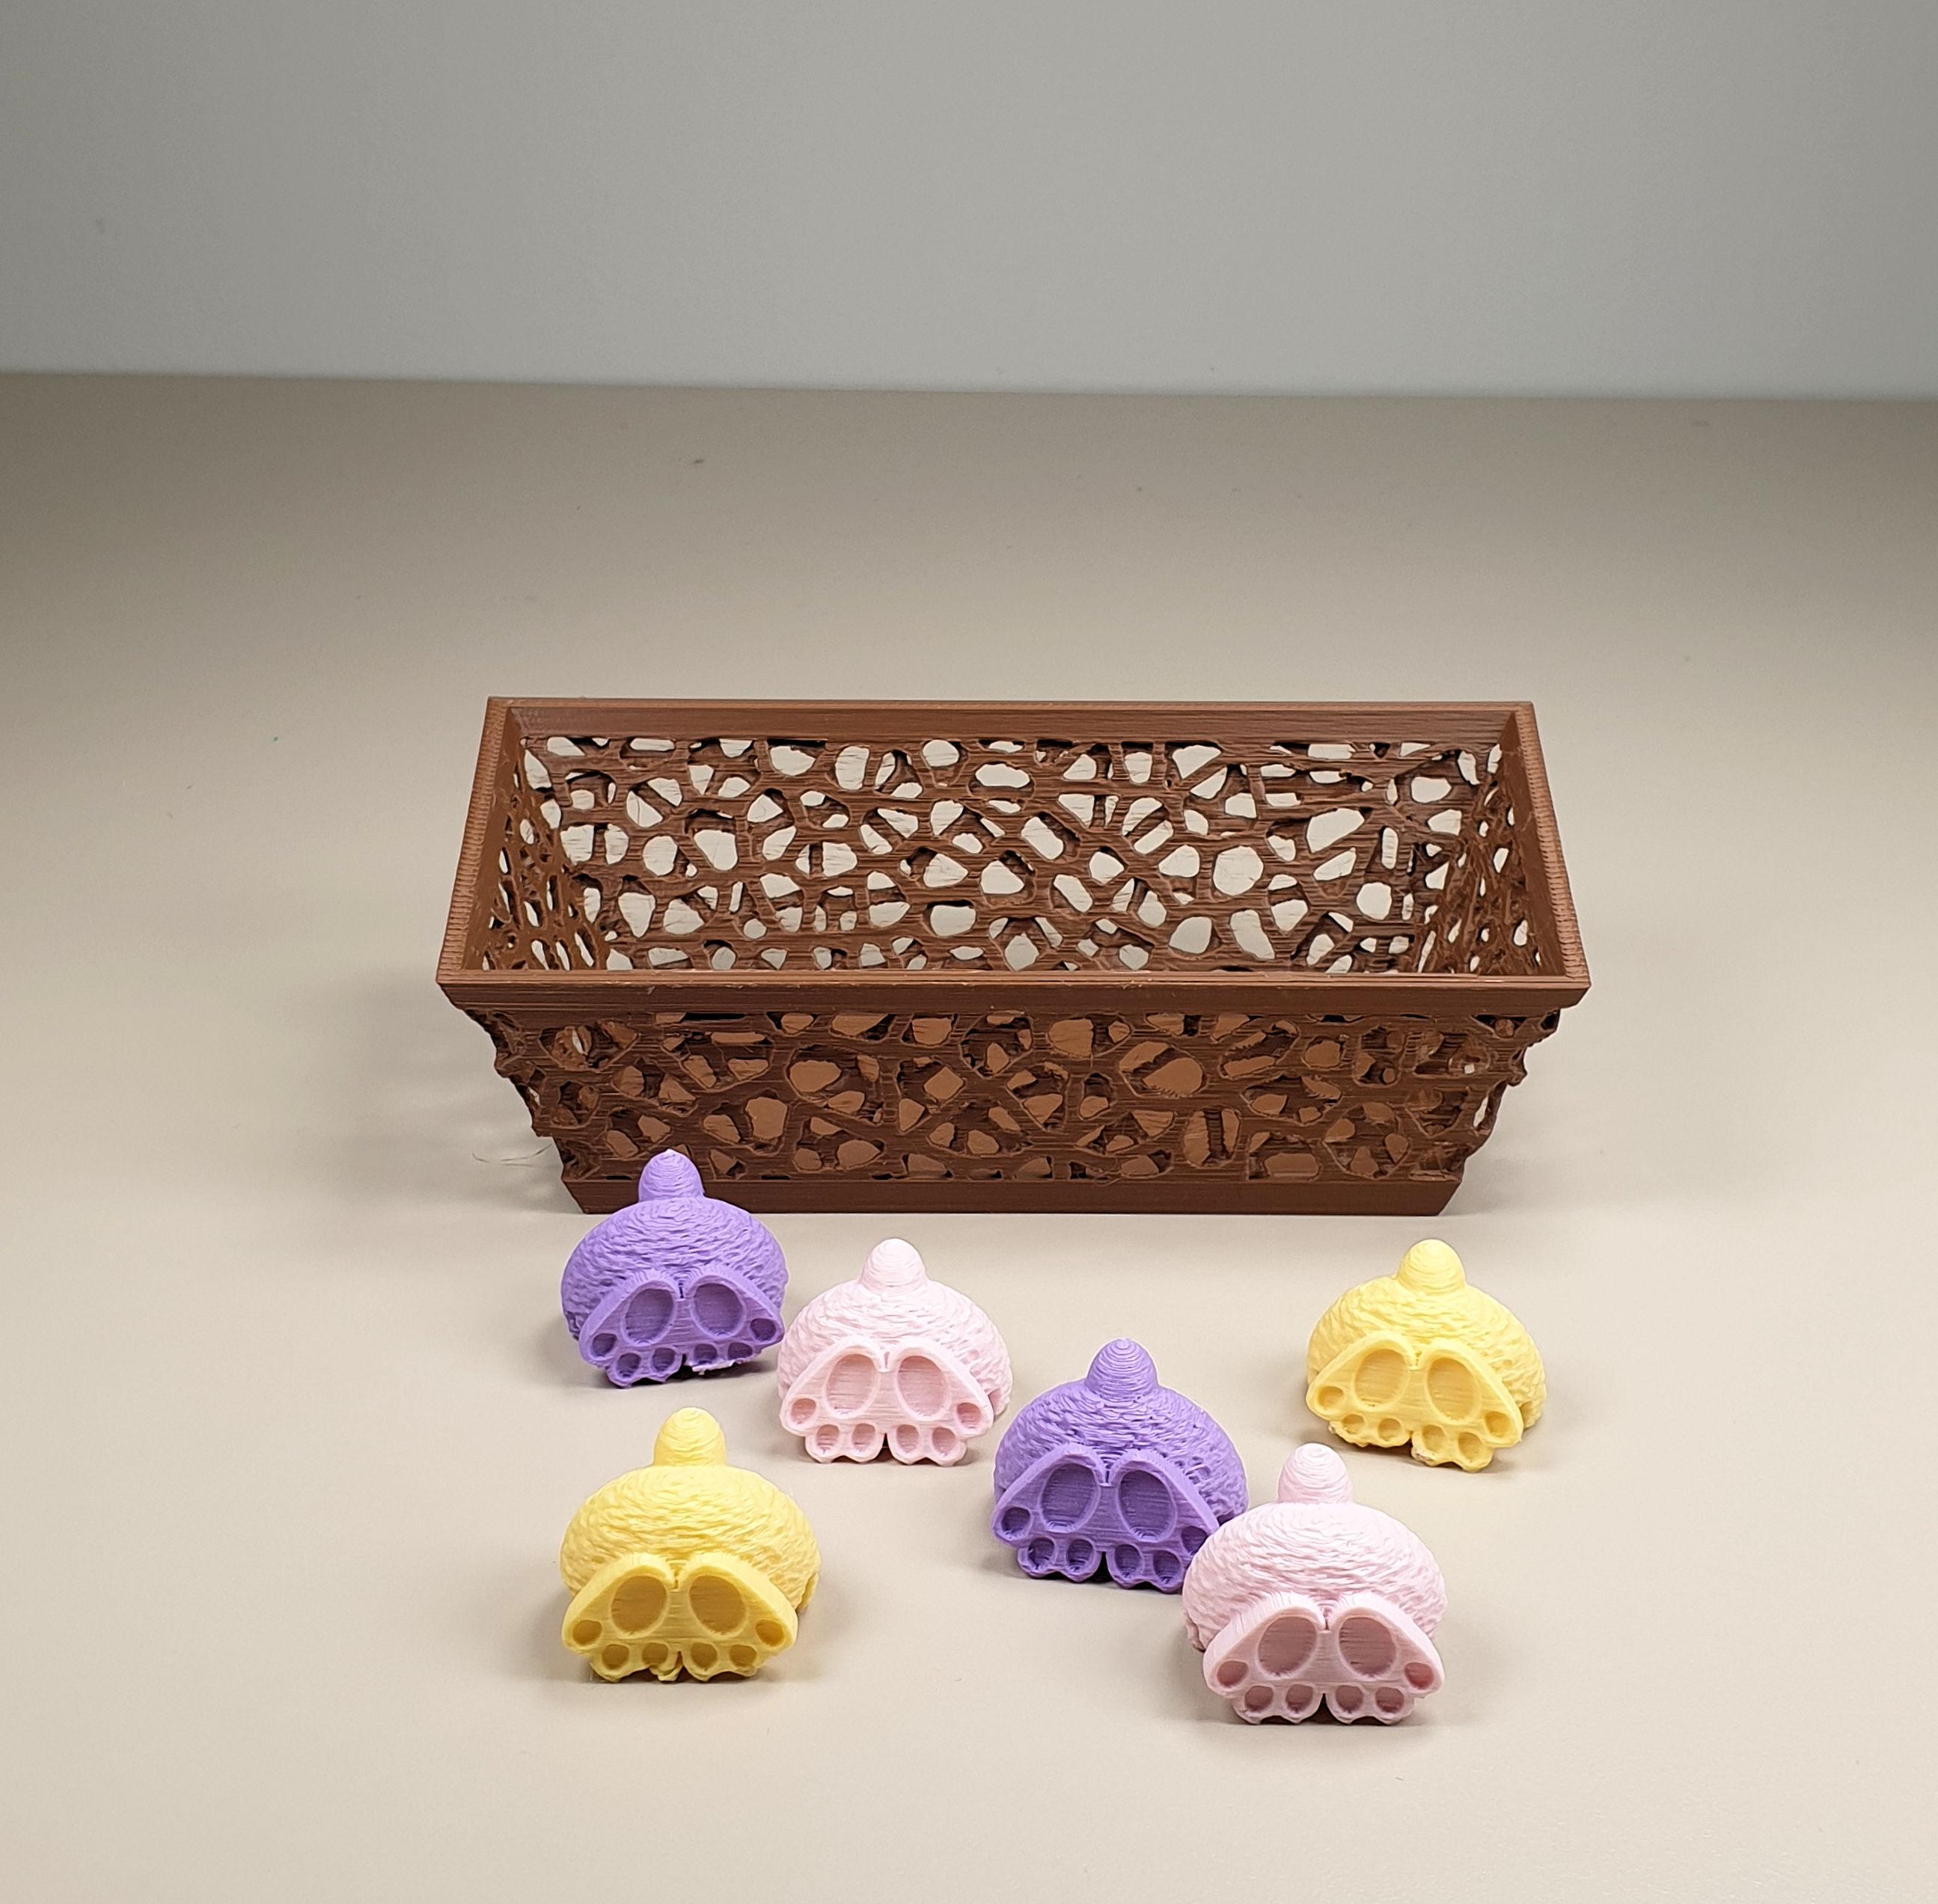 Easter egg basket with optional bunnies 3d model